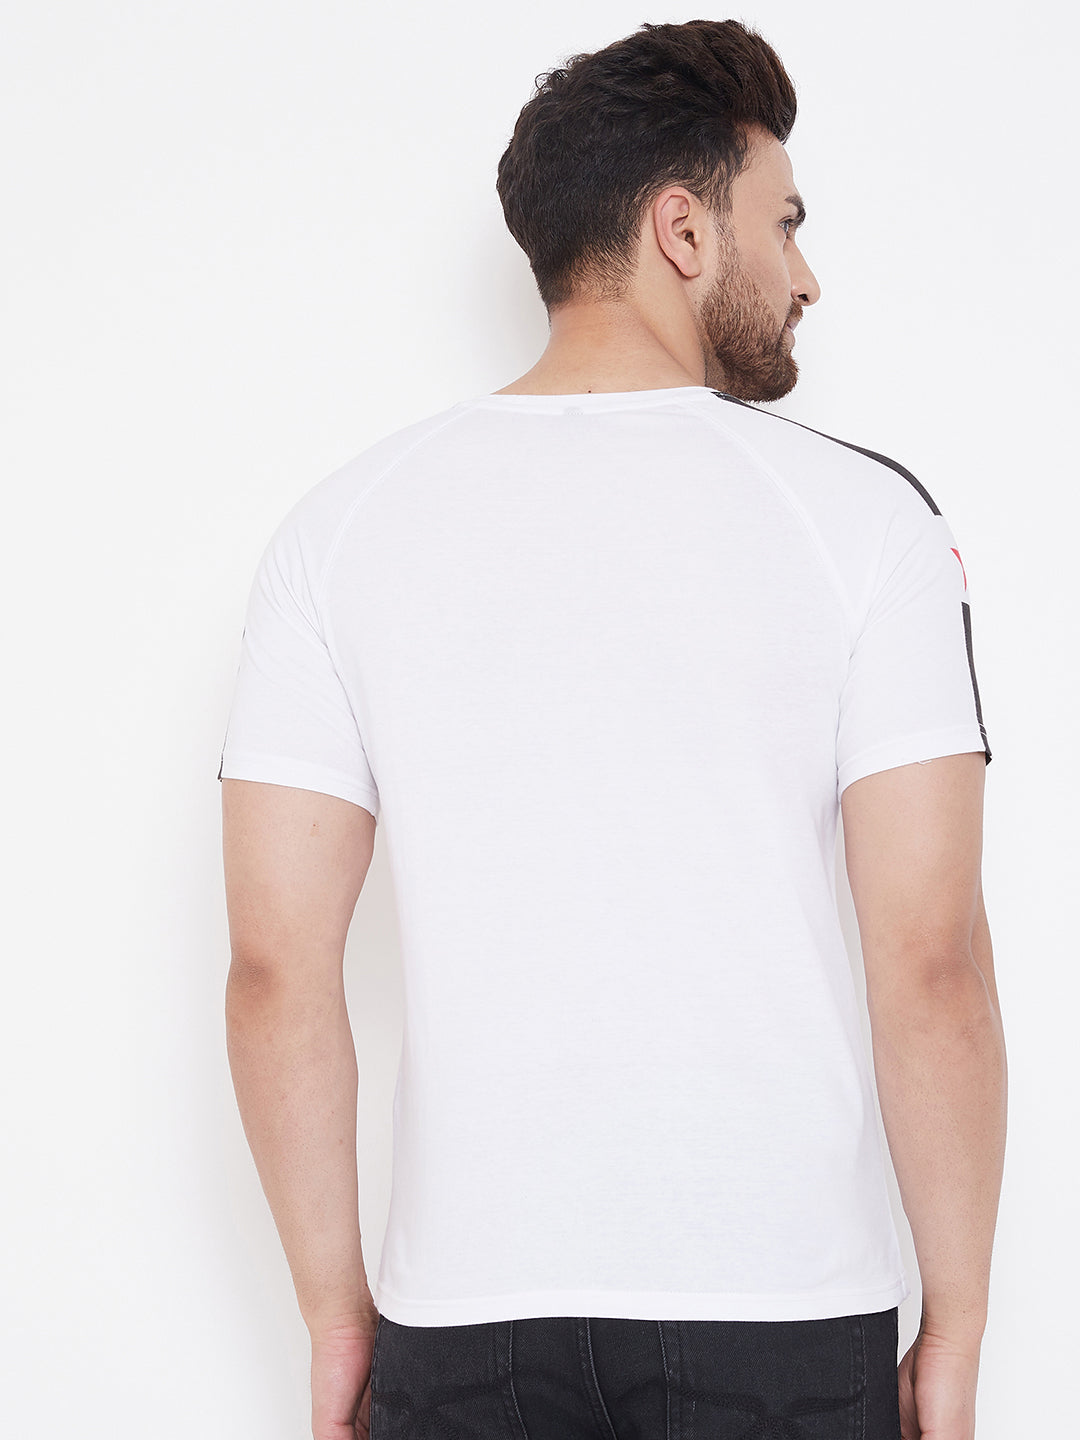 White Printed Men's Half Sleeves Round Neck T-Shirt